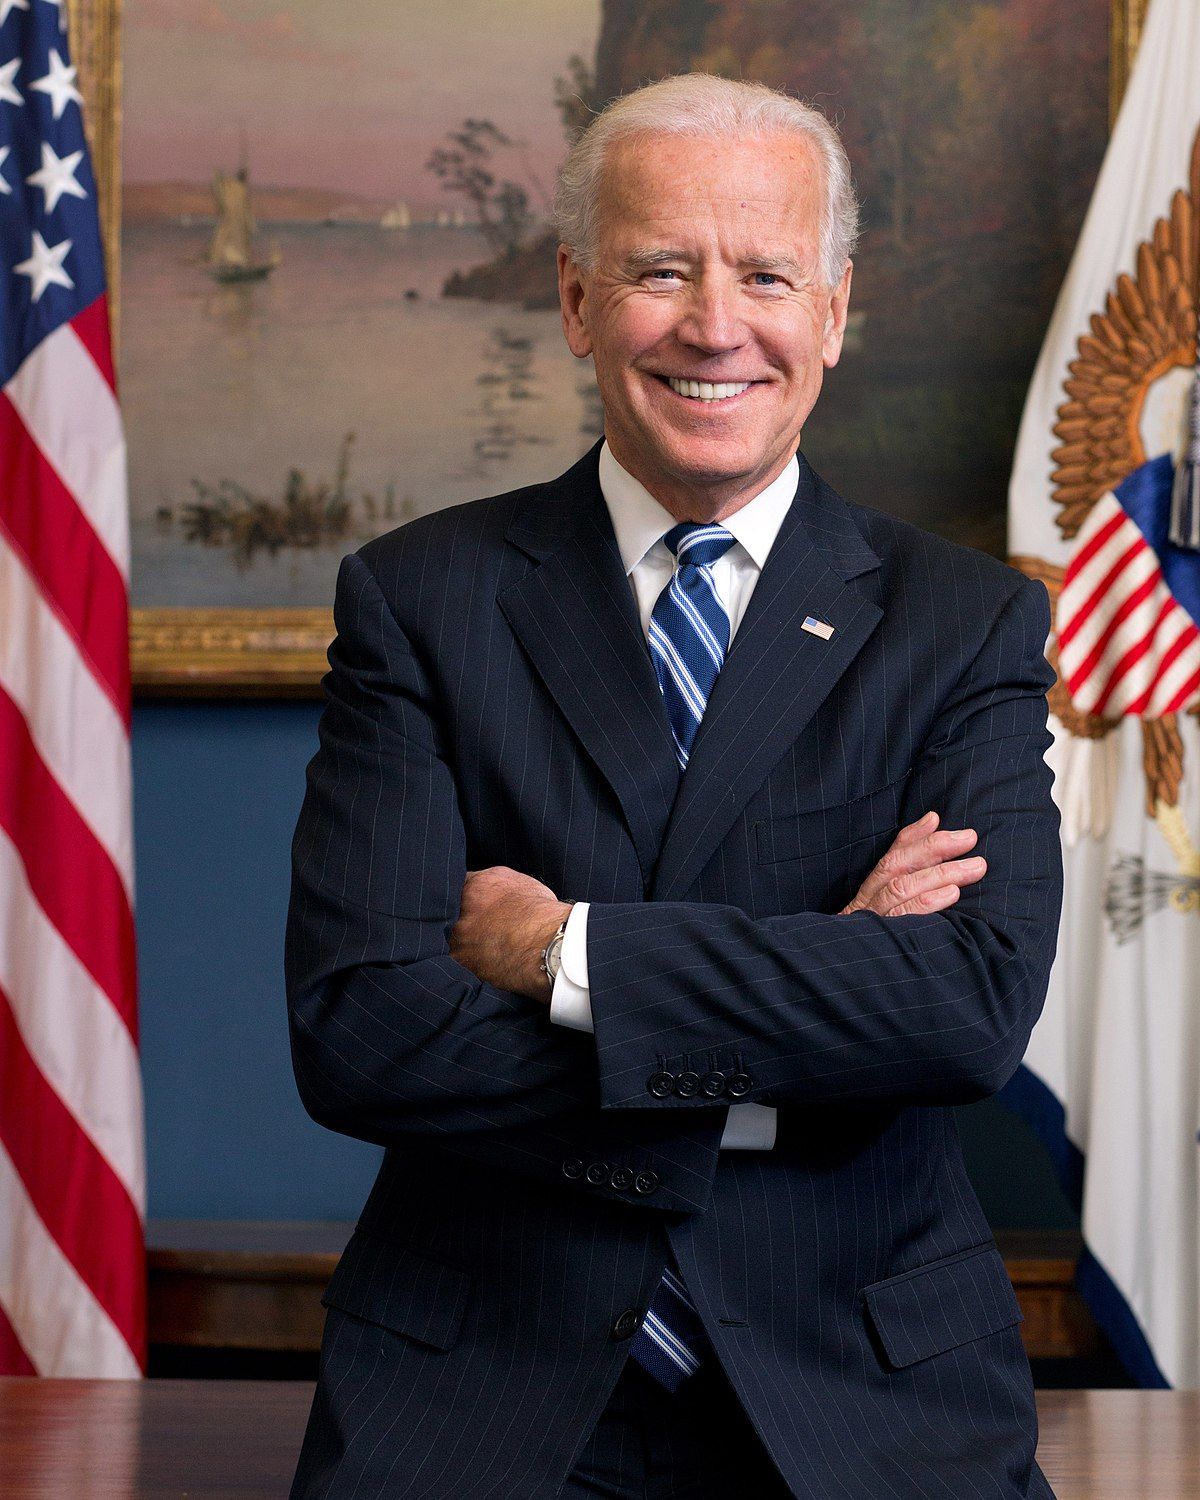 1200px-Joe_Biden_official_portrait_2013.jpg